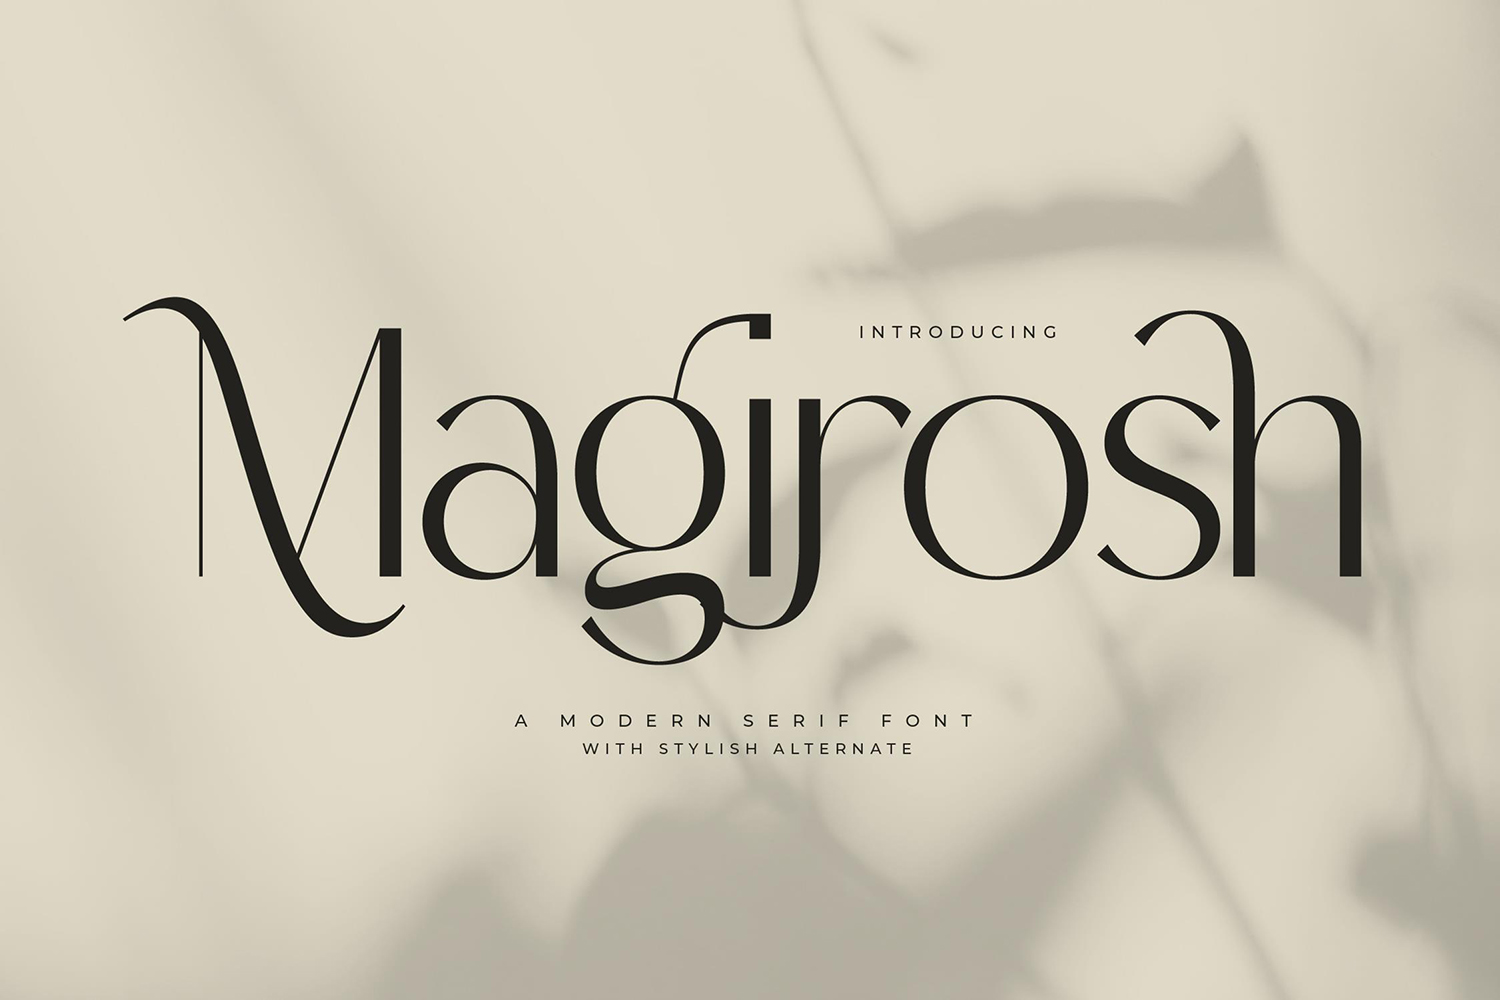 Magirosh Free Font